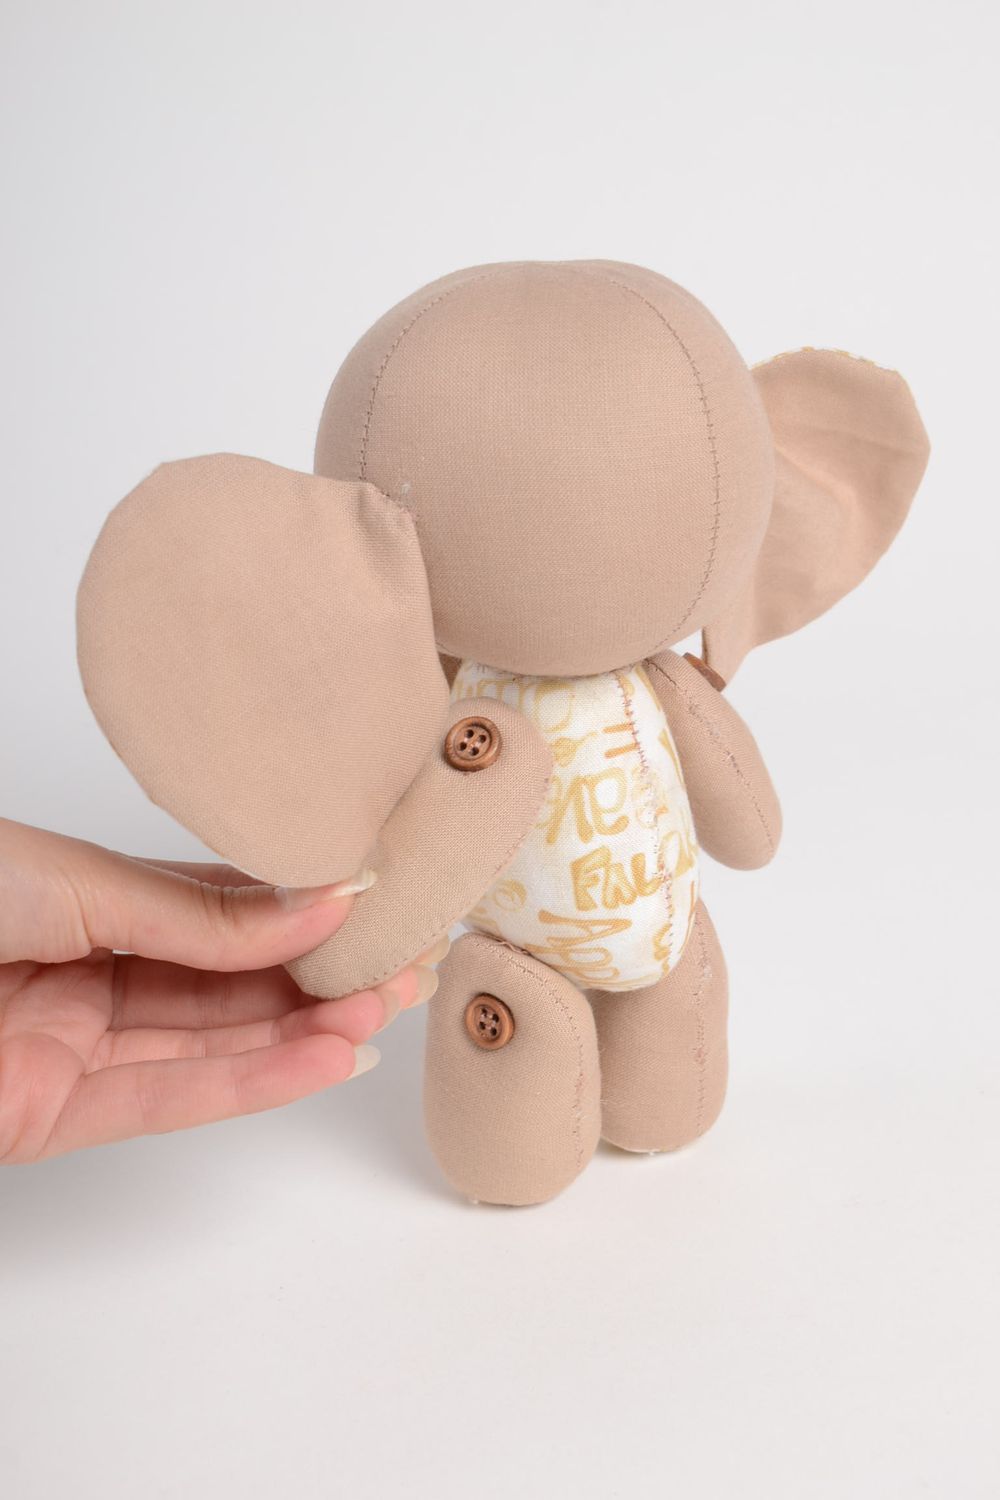 Handmade soft toy elephant stuffed doll for children interior decor ideas photo 4